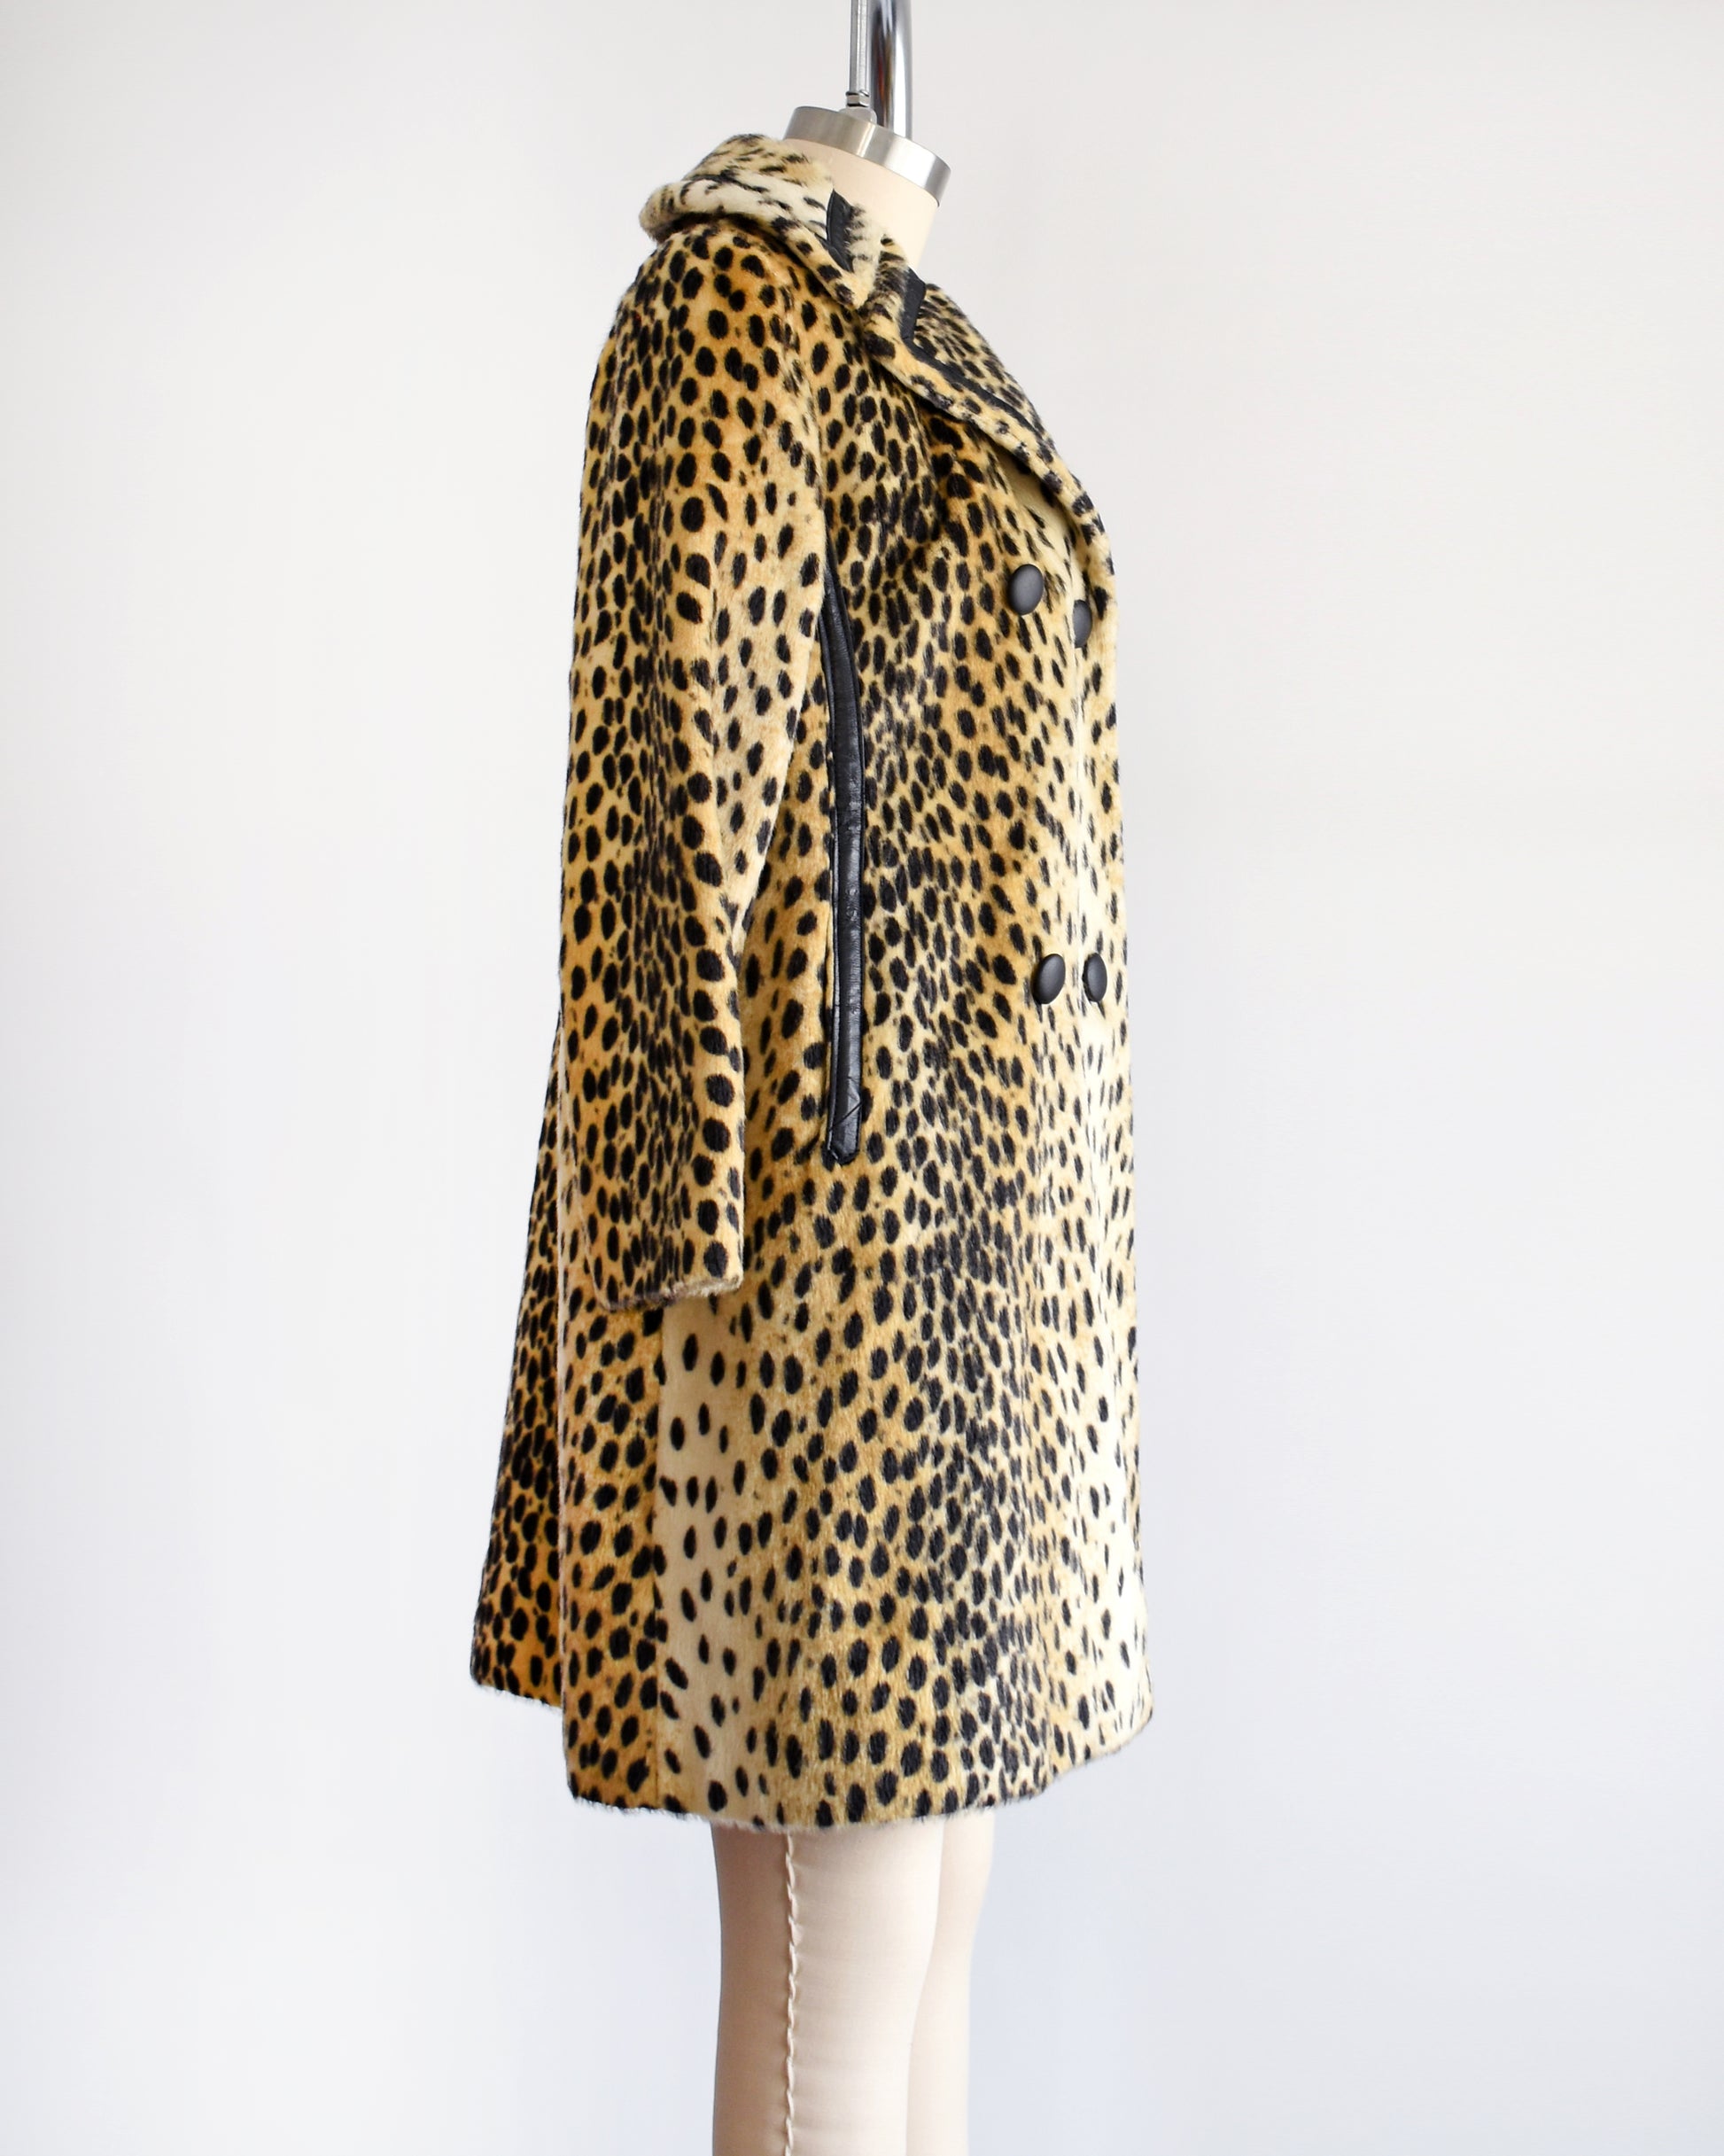 Side view of a faux fur cheetah print coat features golden faux fur with black spots and black faux leather trim